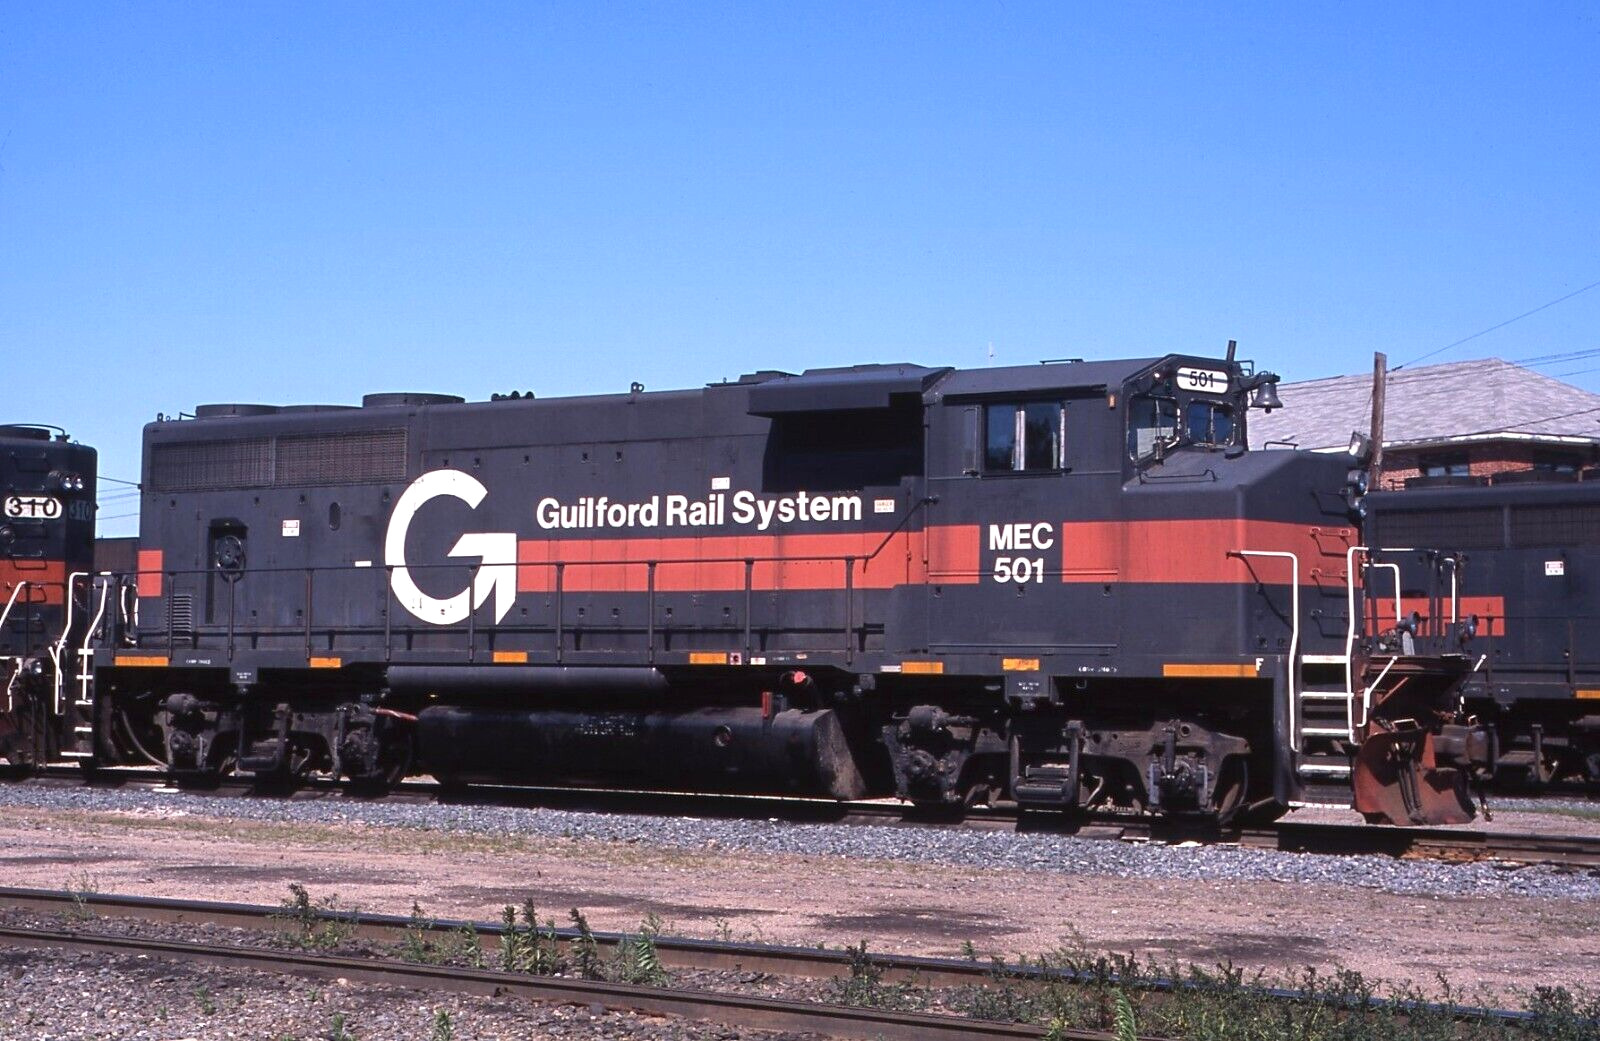 Original Slide: Maine Central / Guilford Rail System GP40-2LW 501